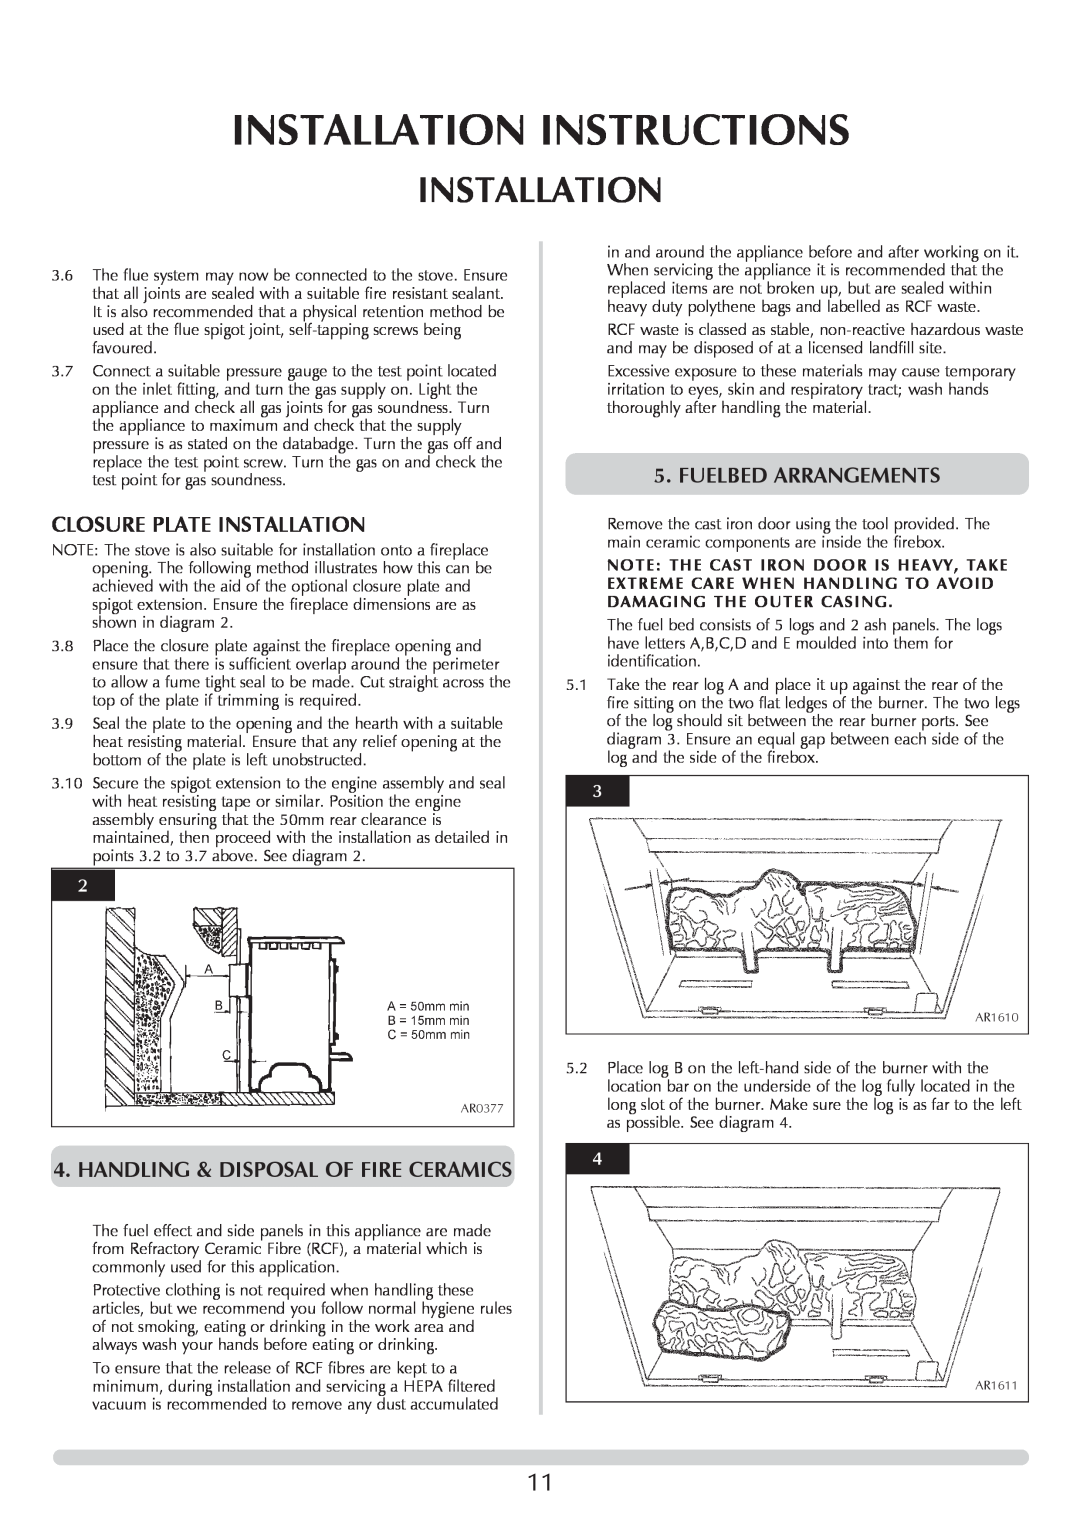 Stovax Stove Range manual Installation Instructions, Closure Plate Installation, Handling & Disposal Of Fire Ceramics 